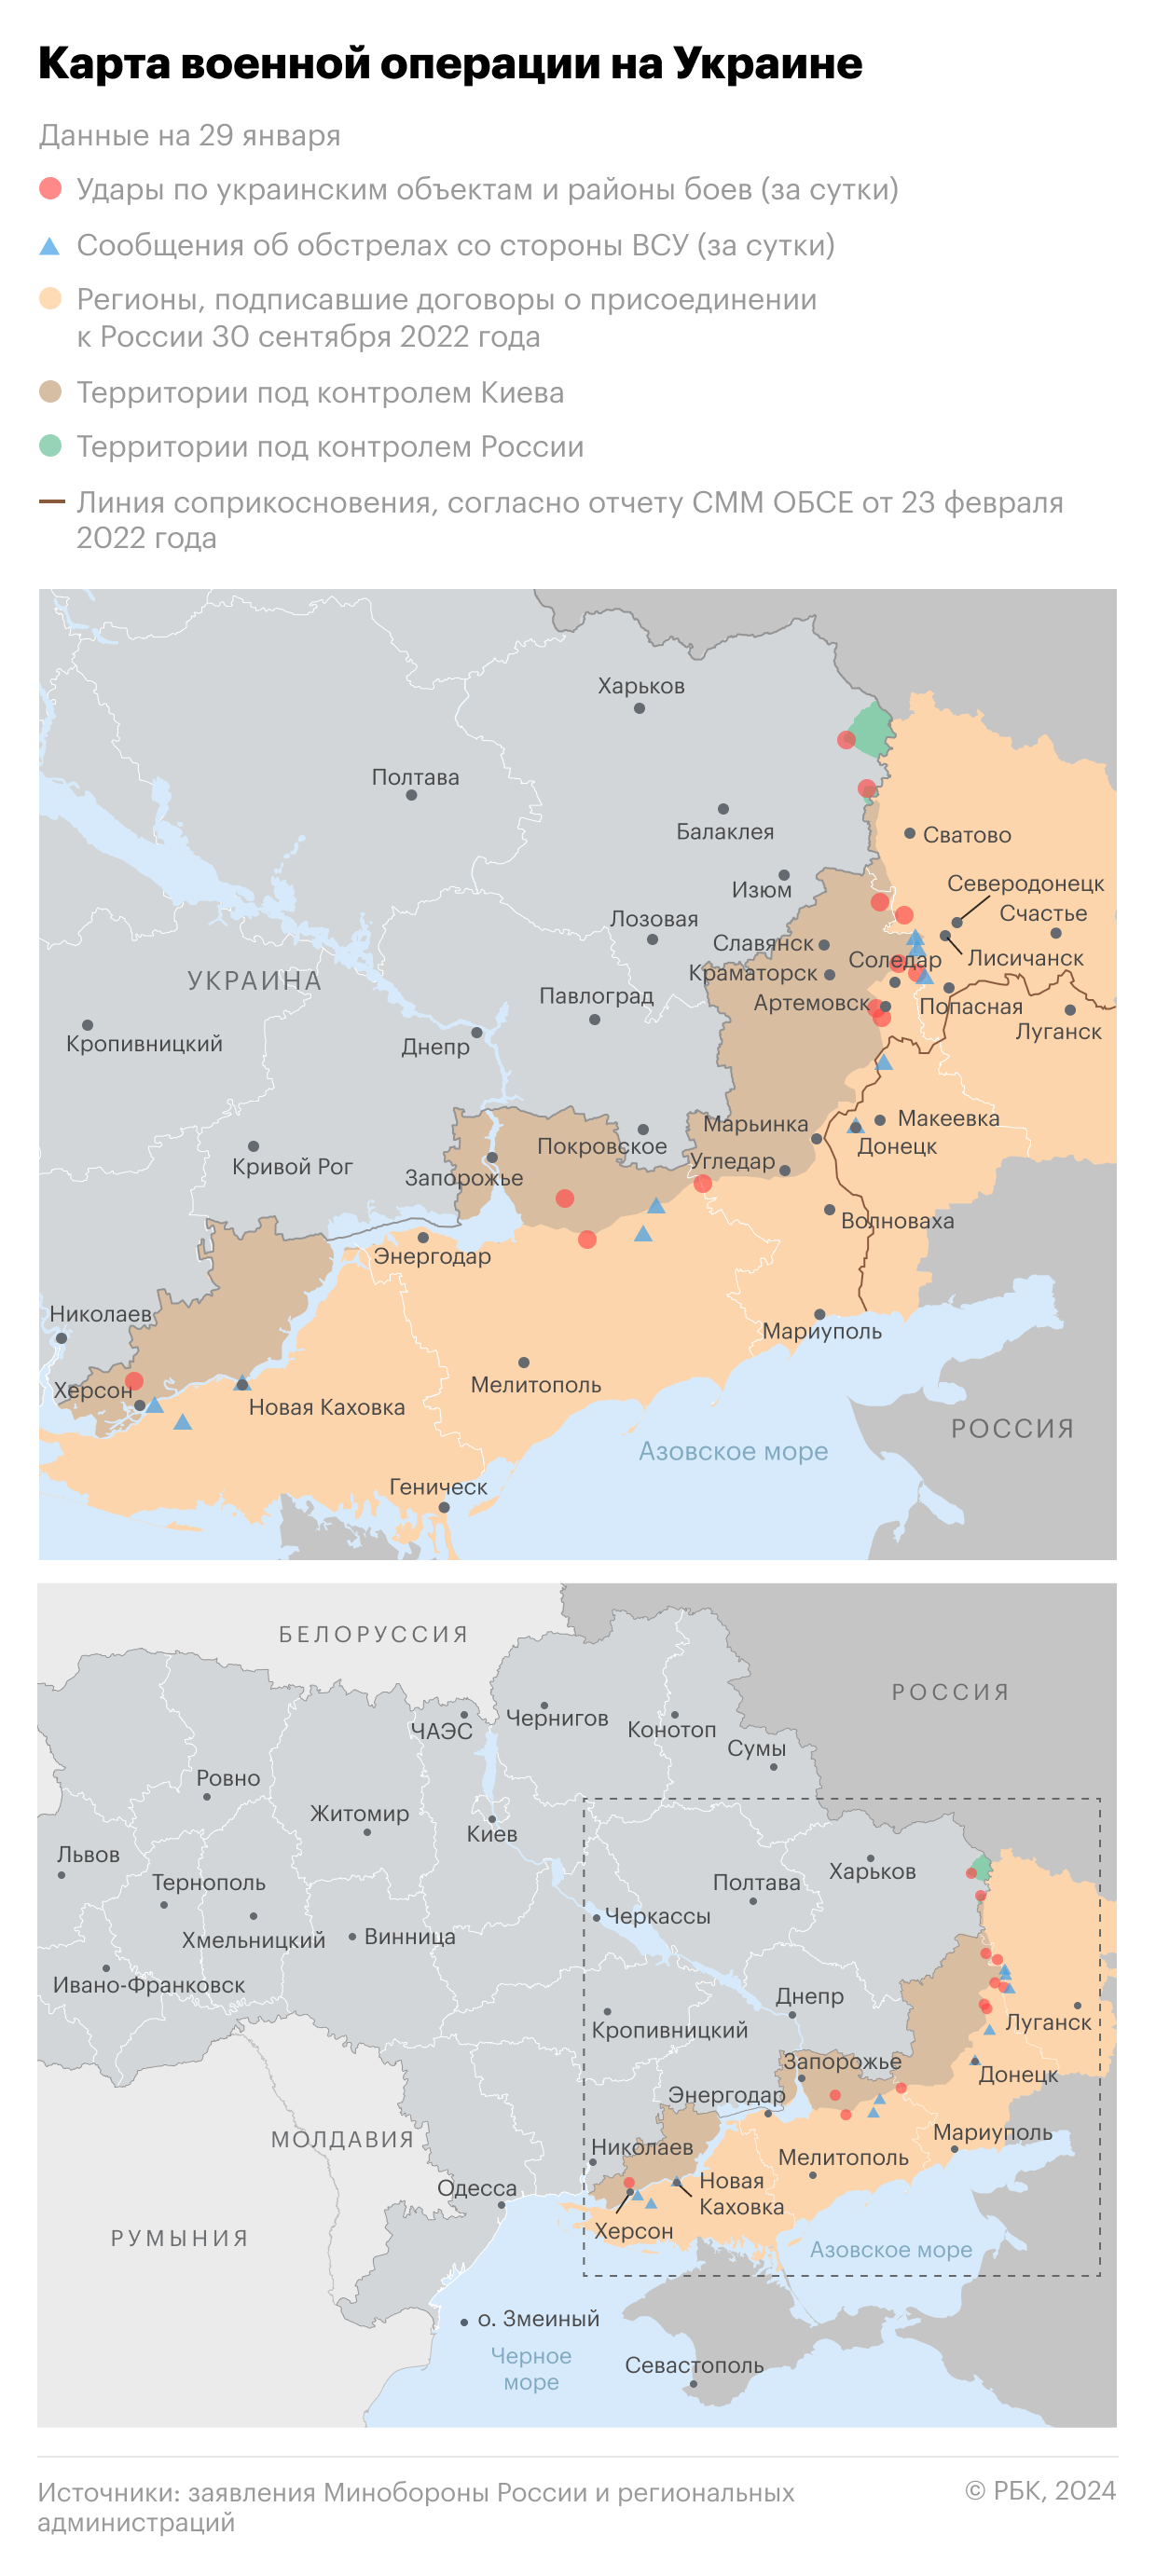 Военная операция на Украине. Карта на 29 января